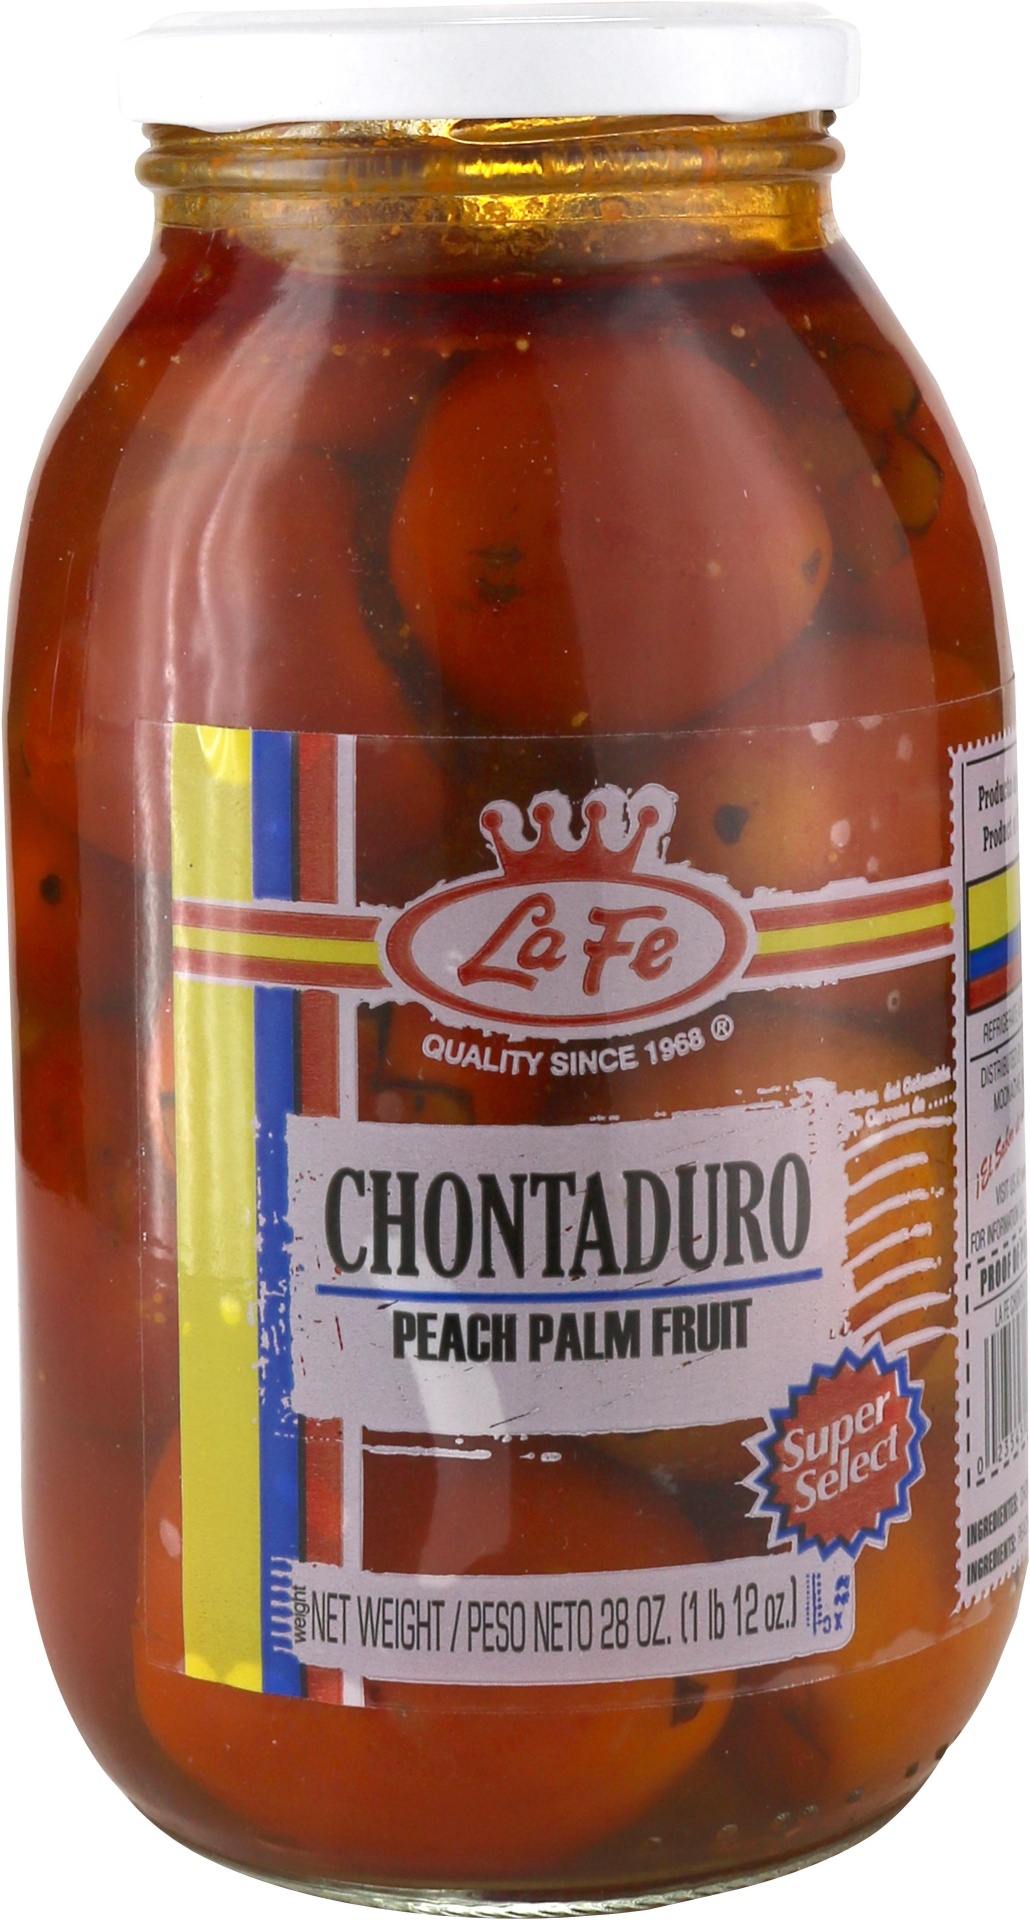 slide 1 of 1, La Fe Chontaduro Peach Palm Fruit, 28 oz